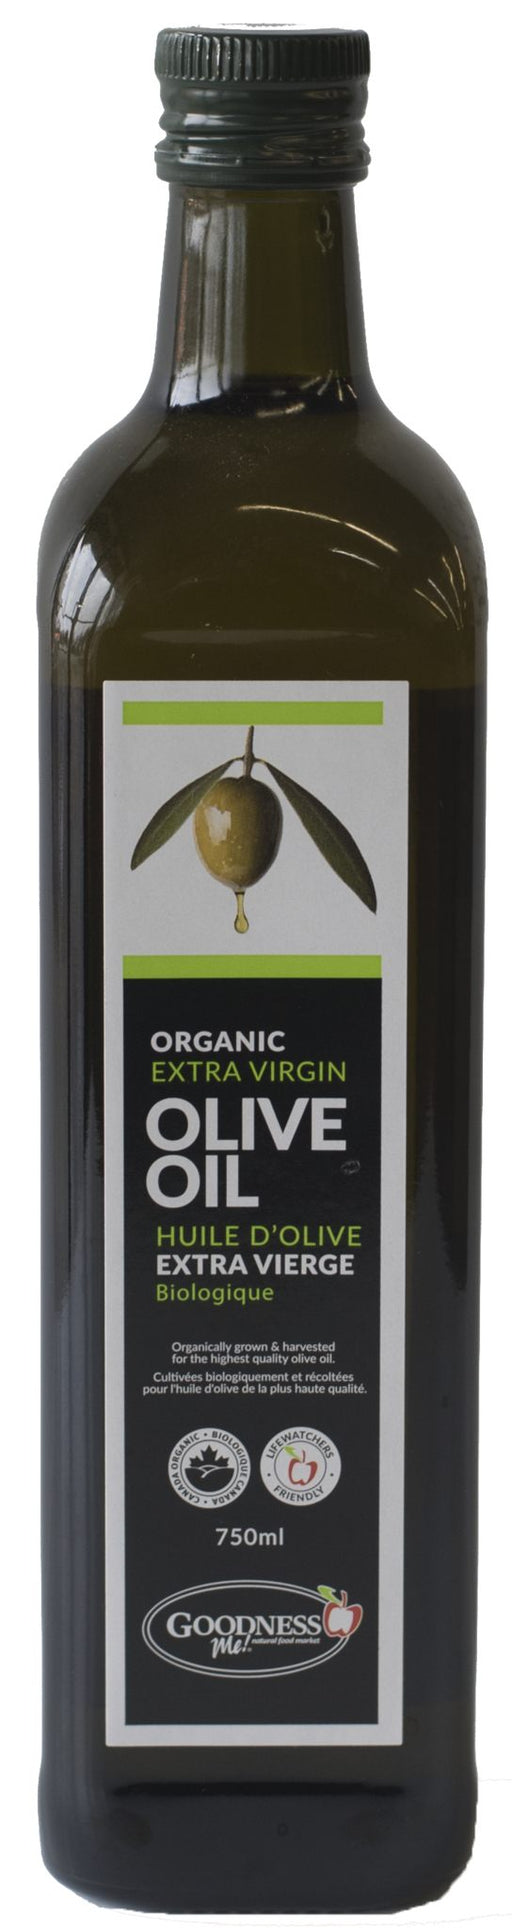 Goodness Me - Organic Olive Oil, 750ml